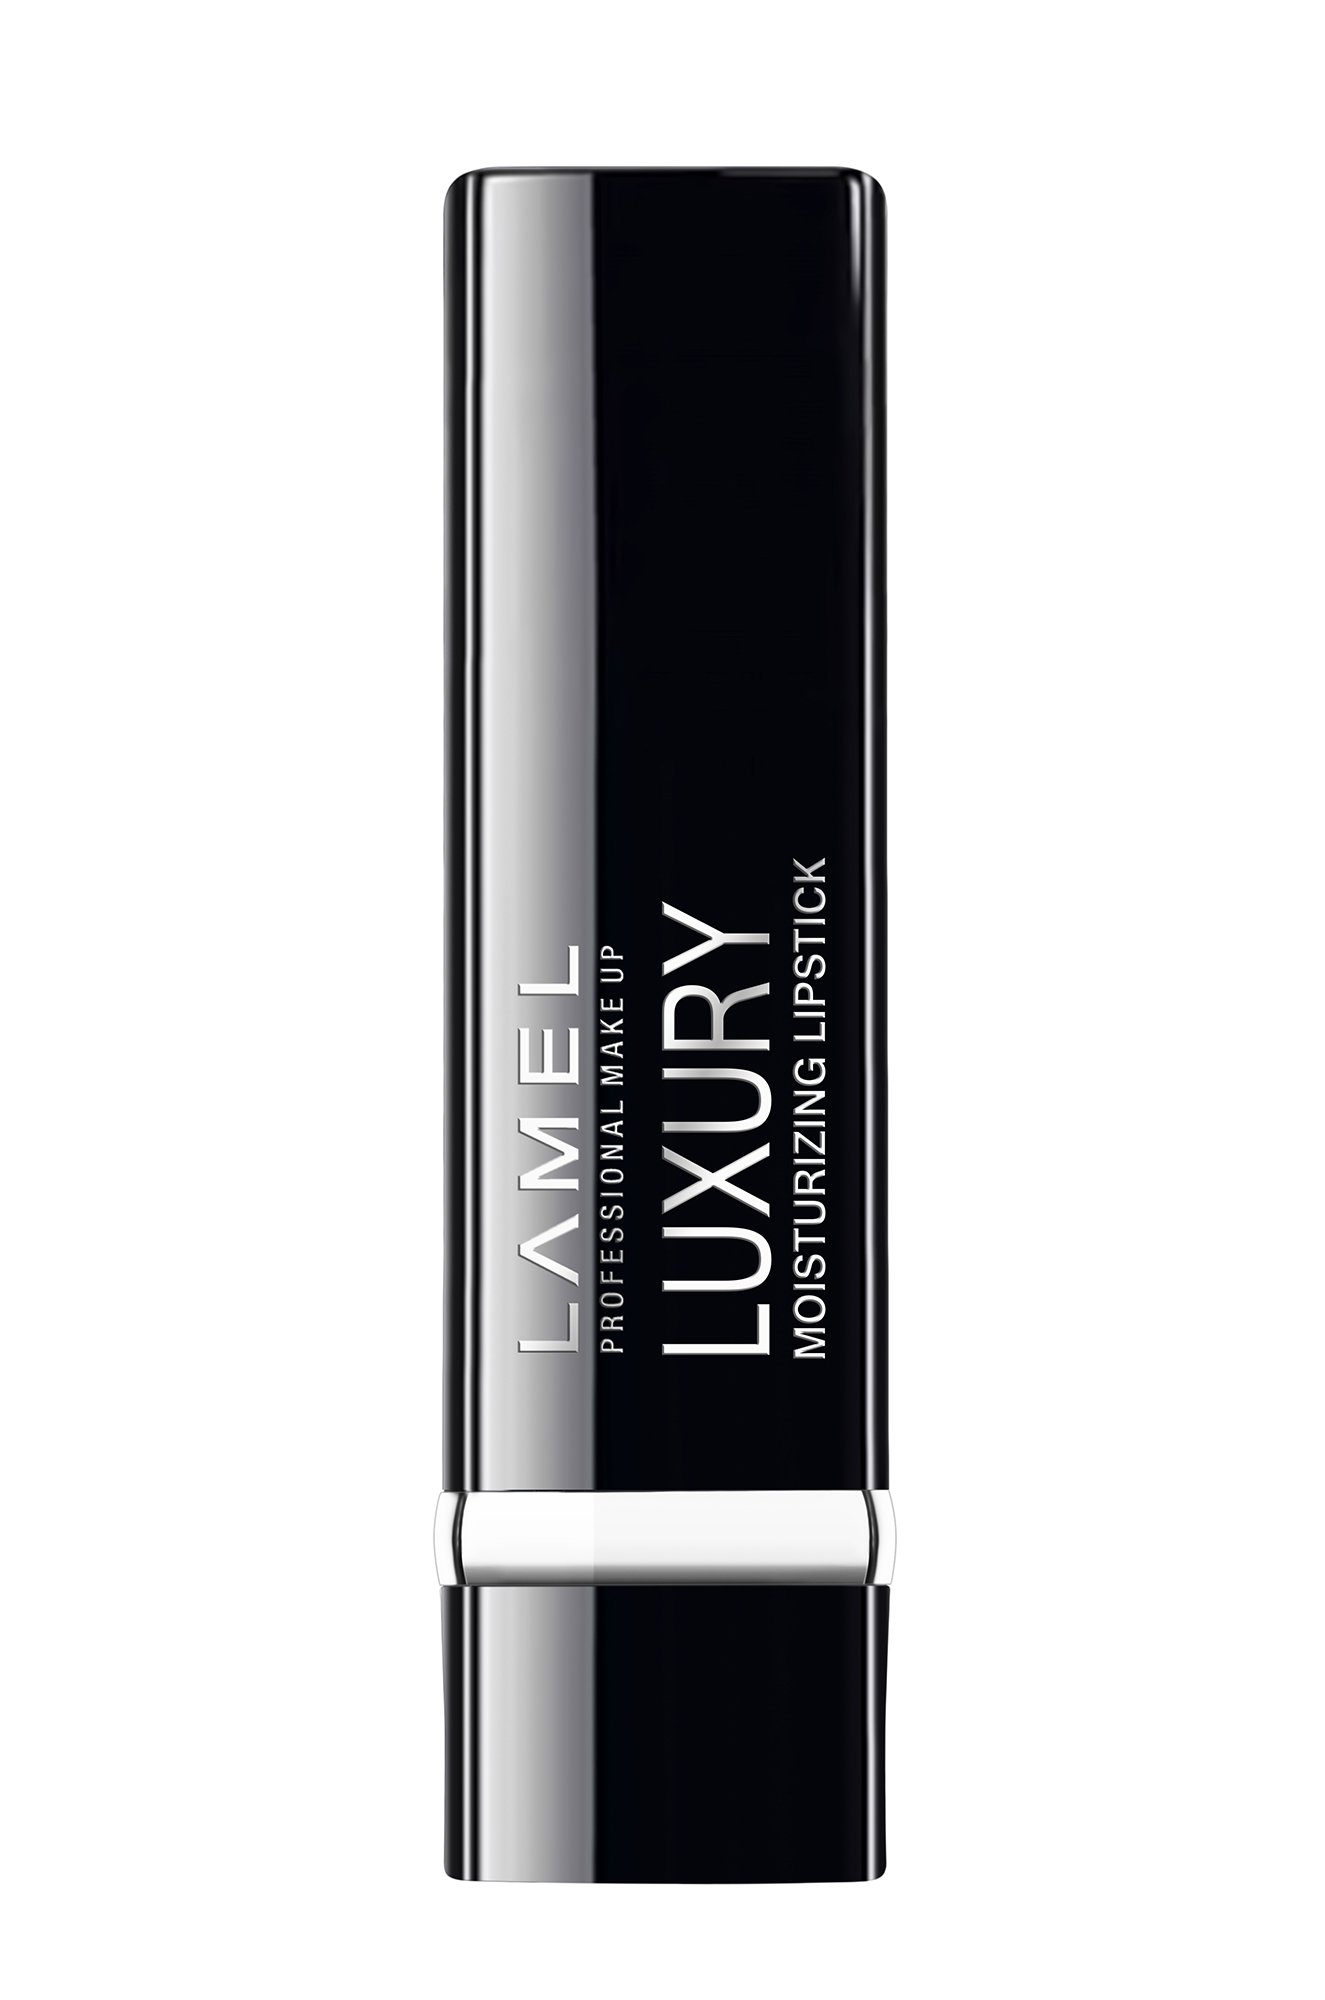 Помада для губ Luxury Moisturizing Lipstick т.401 etude 3,8 г LAMEL Professional